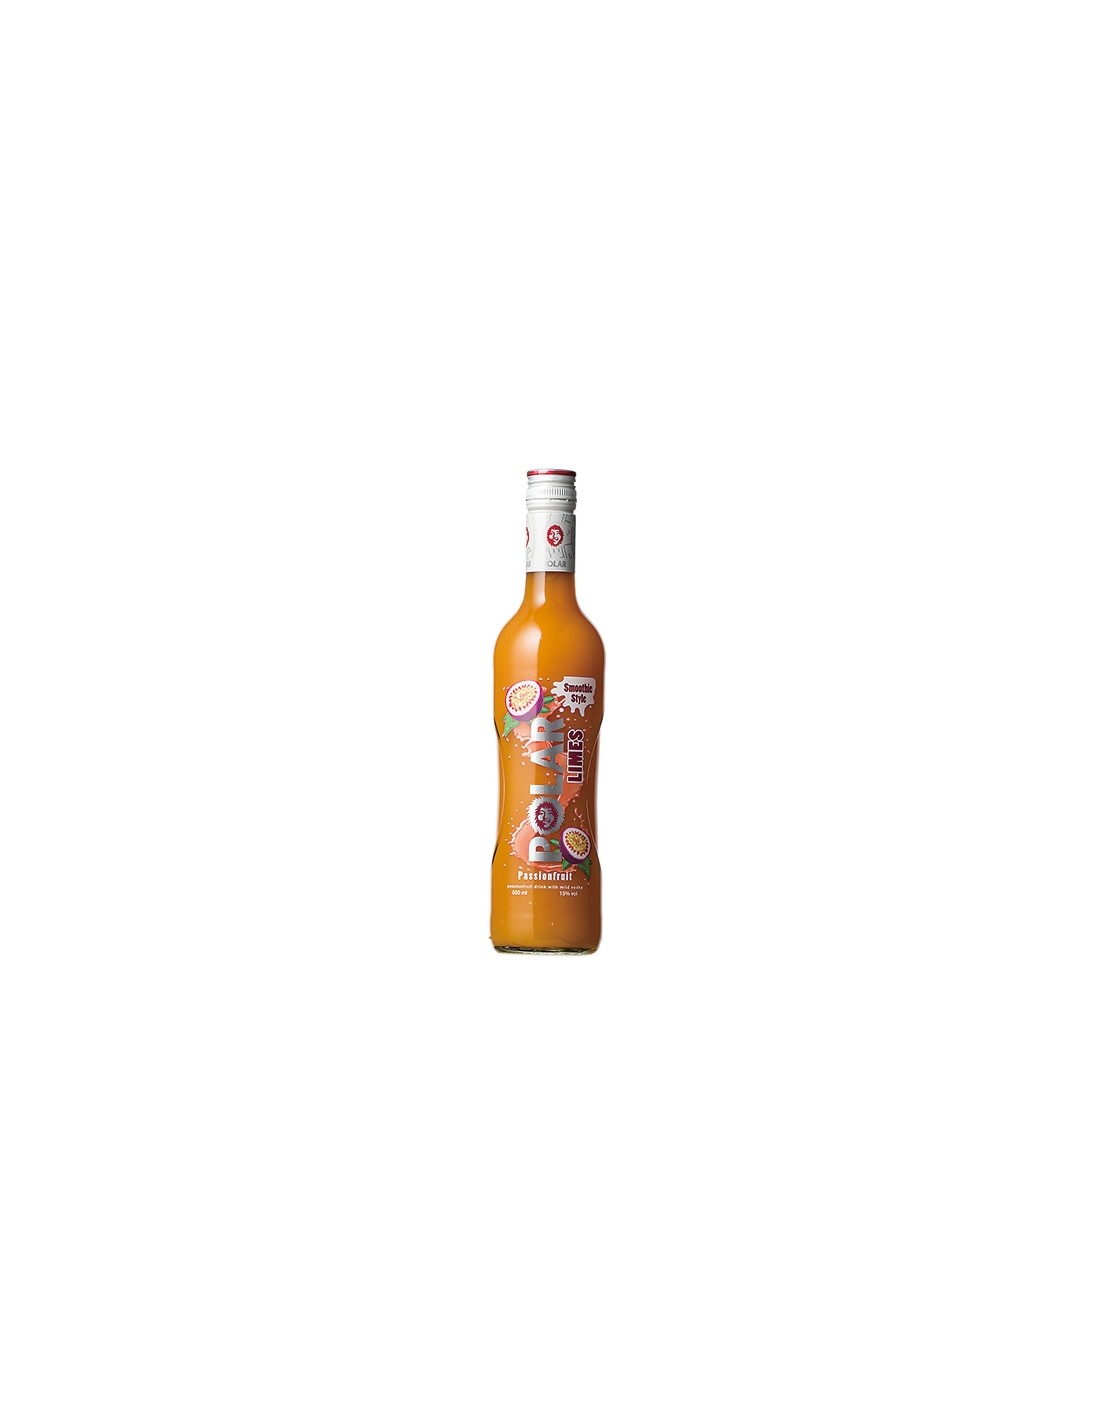 Vodca Polar Limes Passionfruit, 1L, 15% alc. alcooldiscount.ro